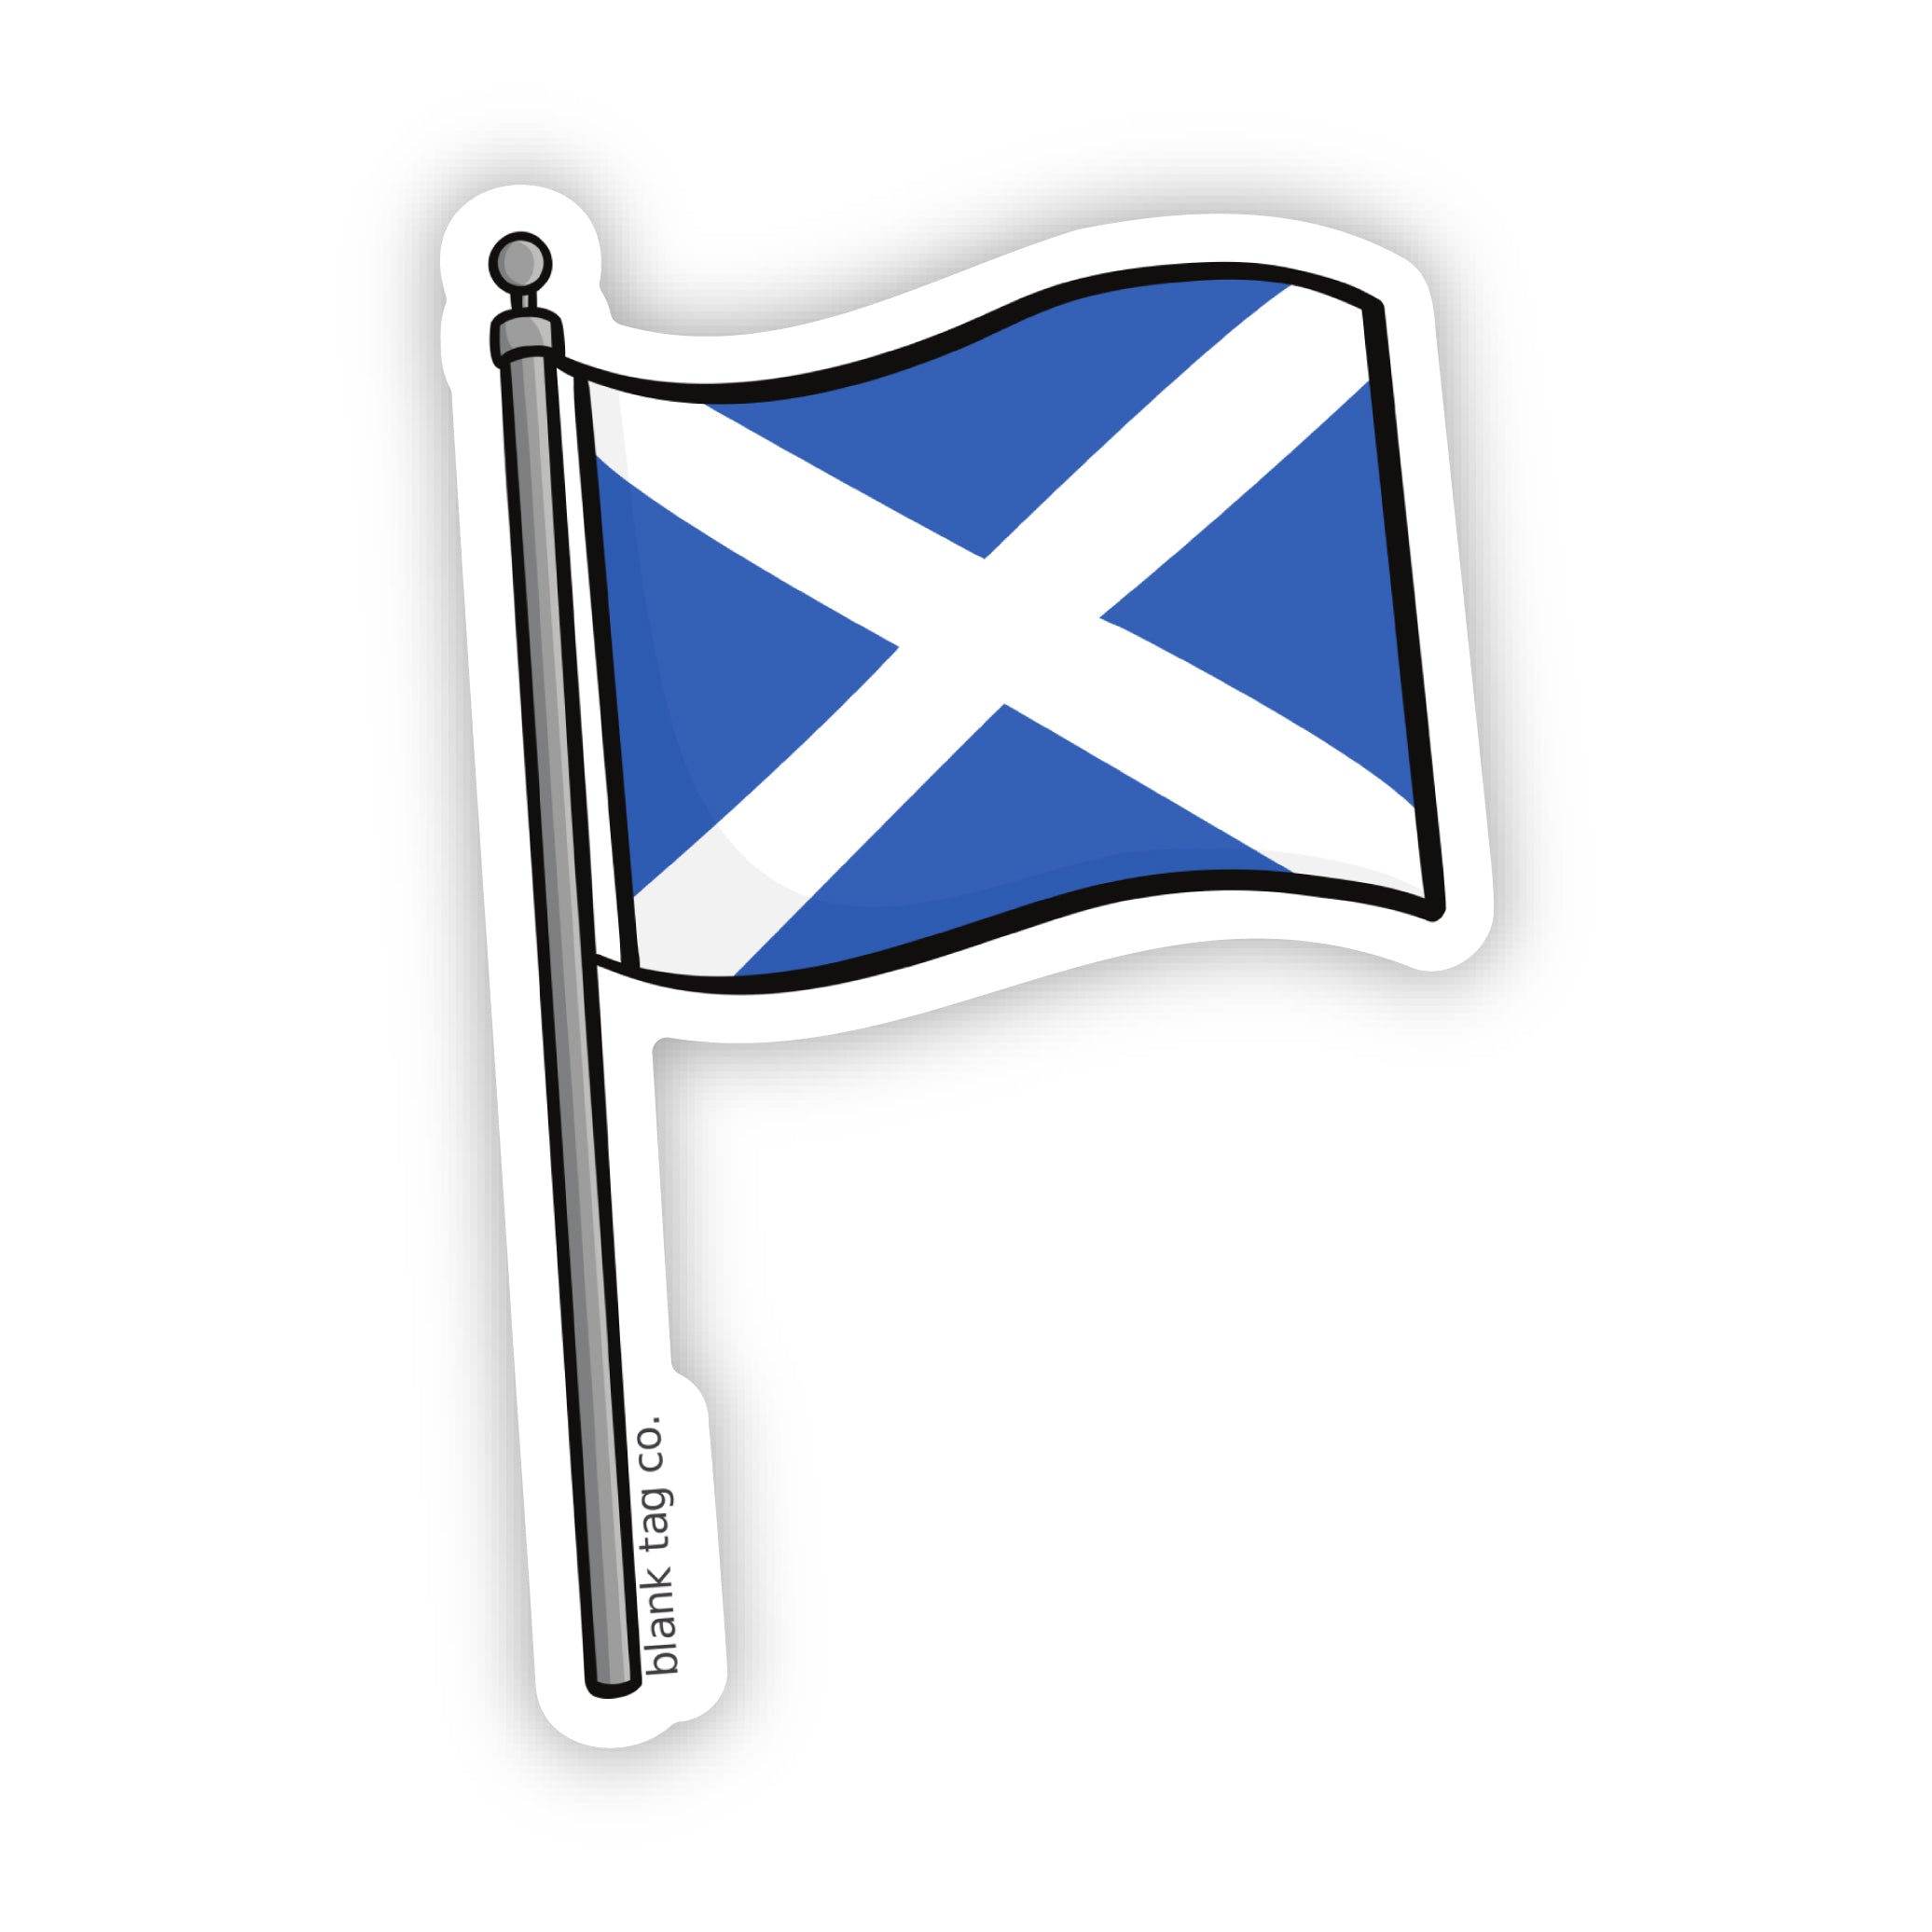 The Scotland Flag Sticker